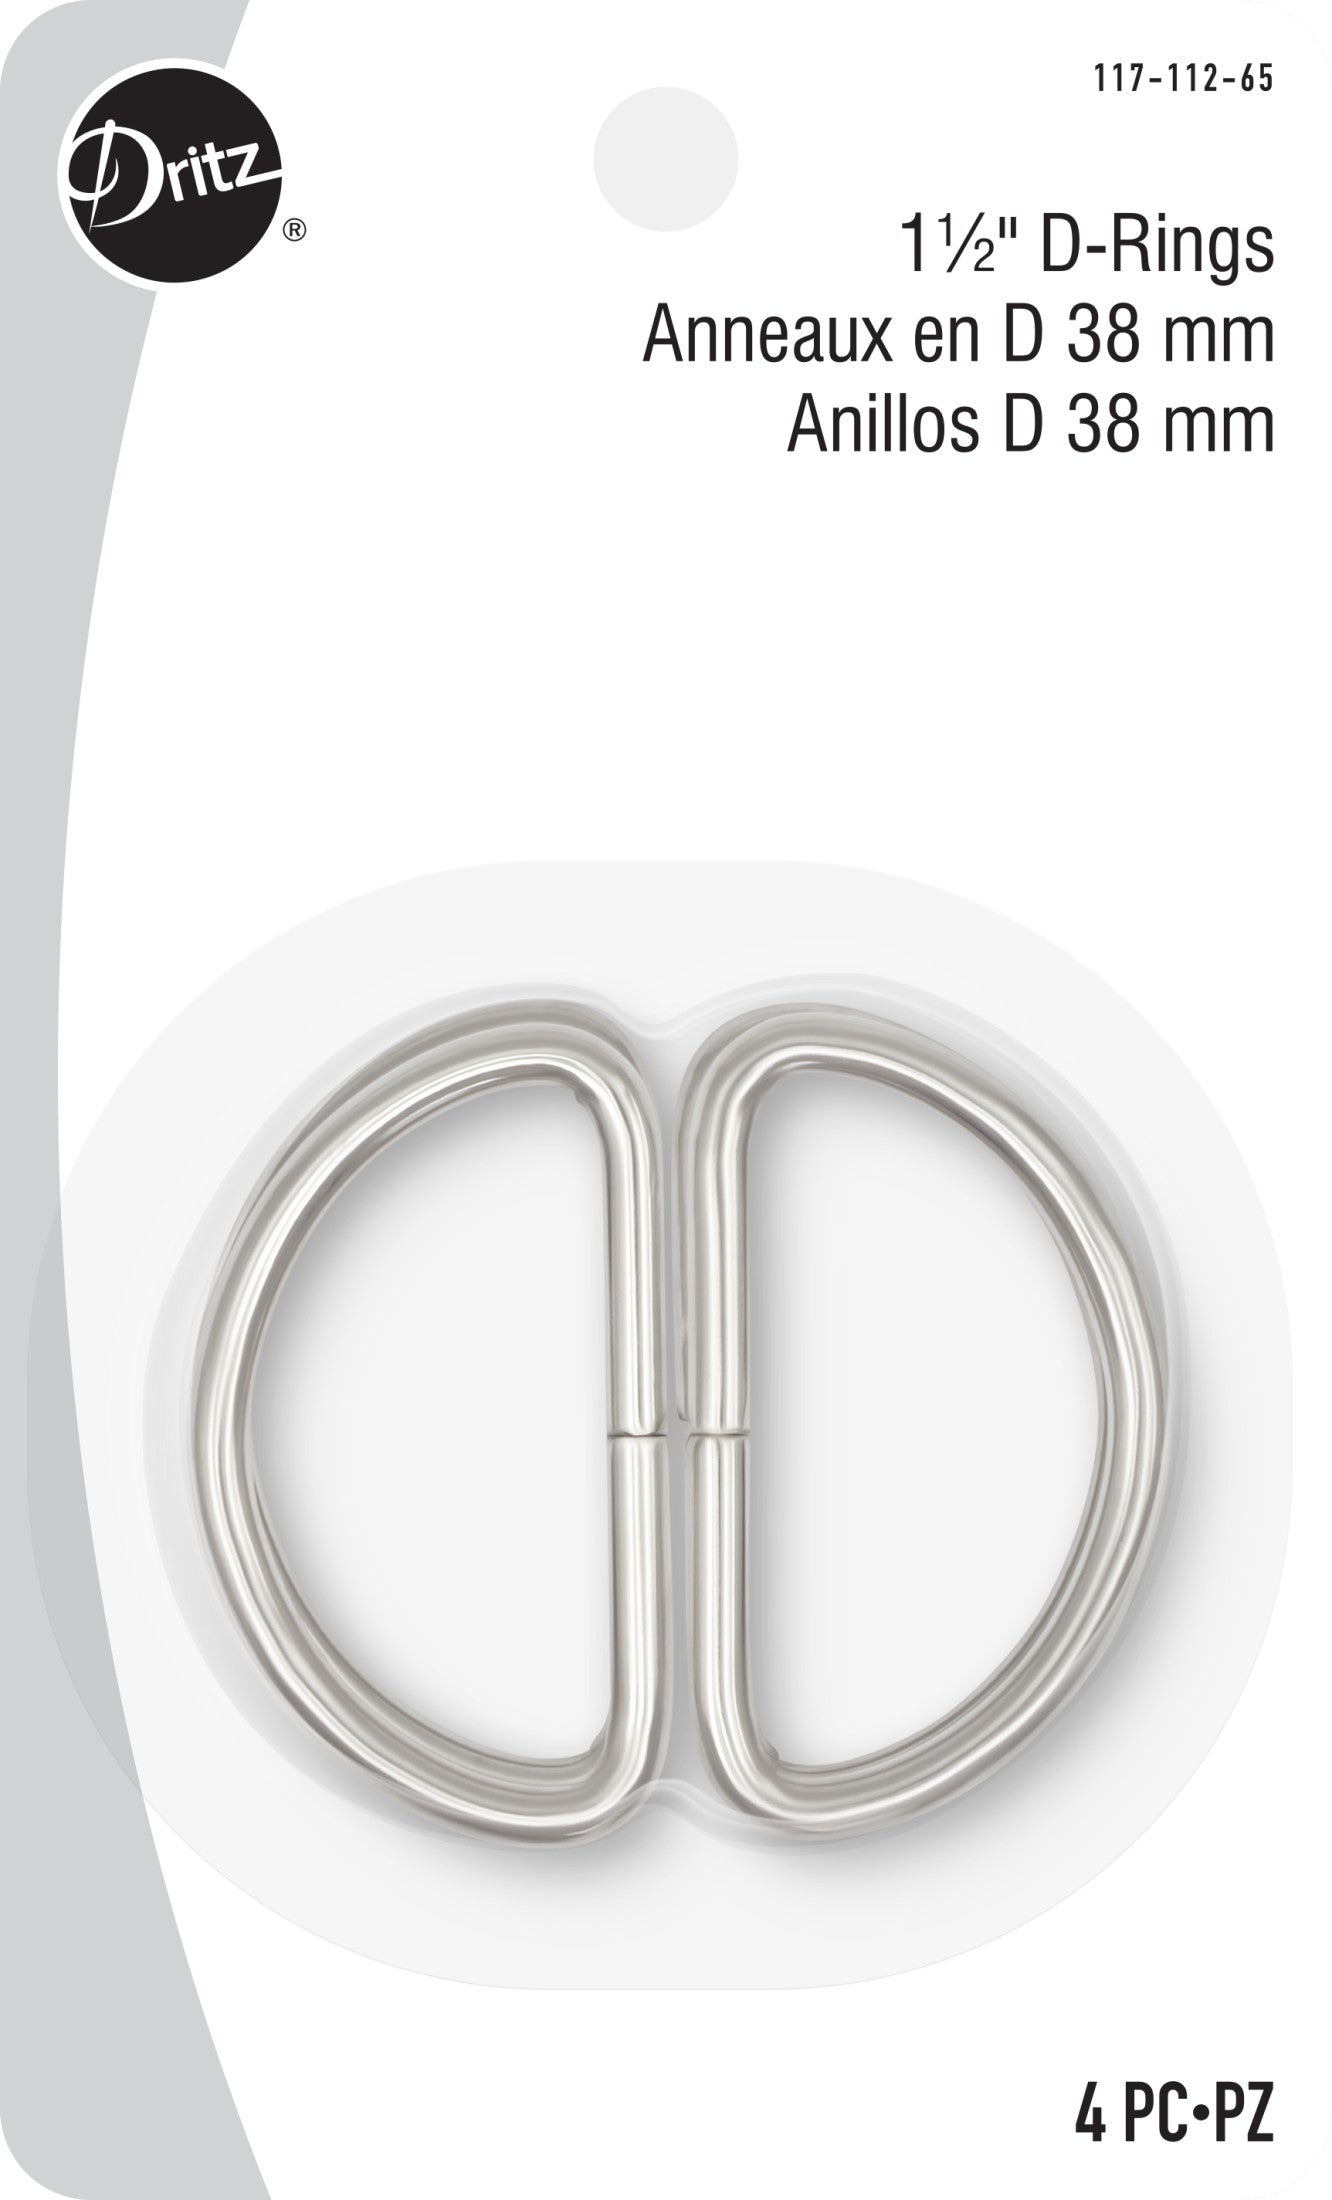 Small Swivel Hook & D-Ring - 1/2/1/2 - Antique Brass